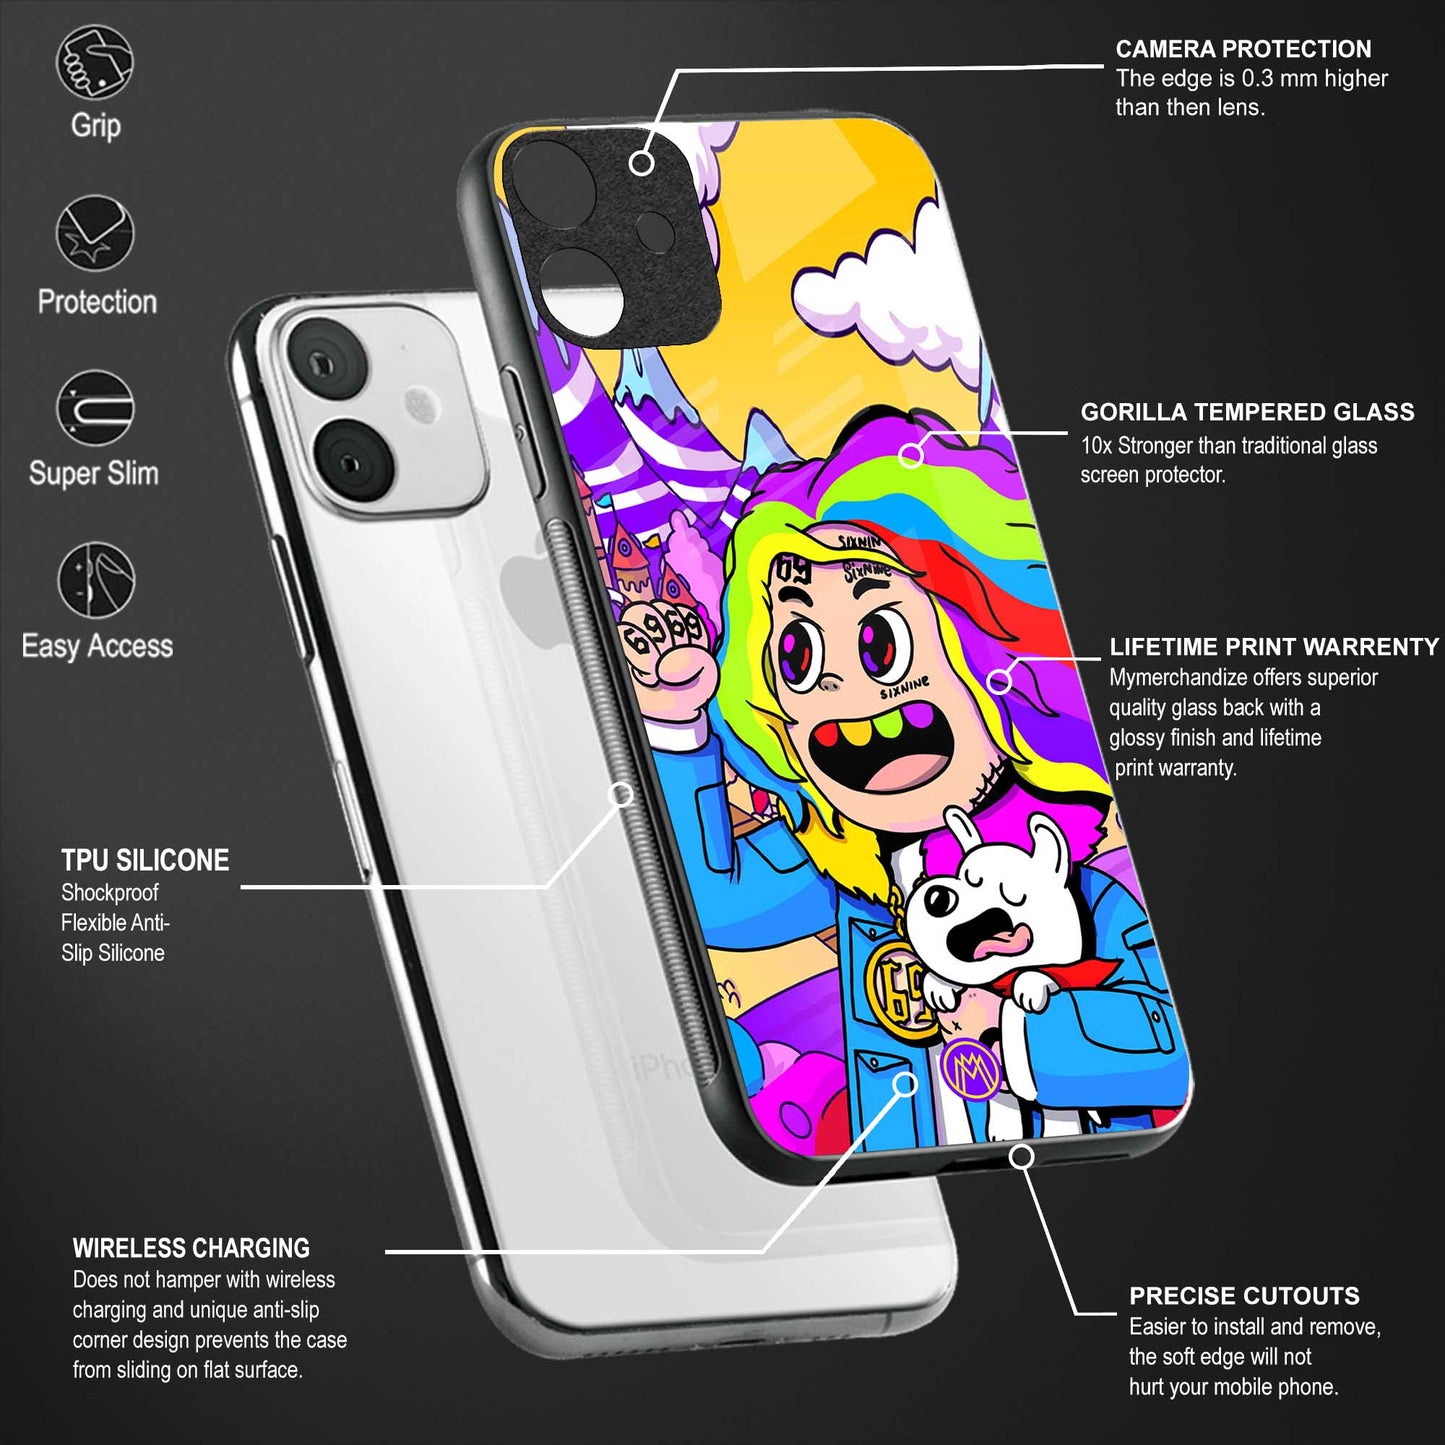 tekashi 6ix9ine back phone cover | glass case for samsung galaxy a73 5g